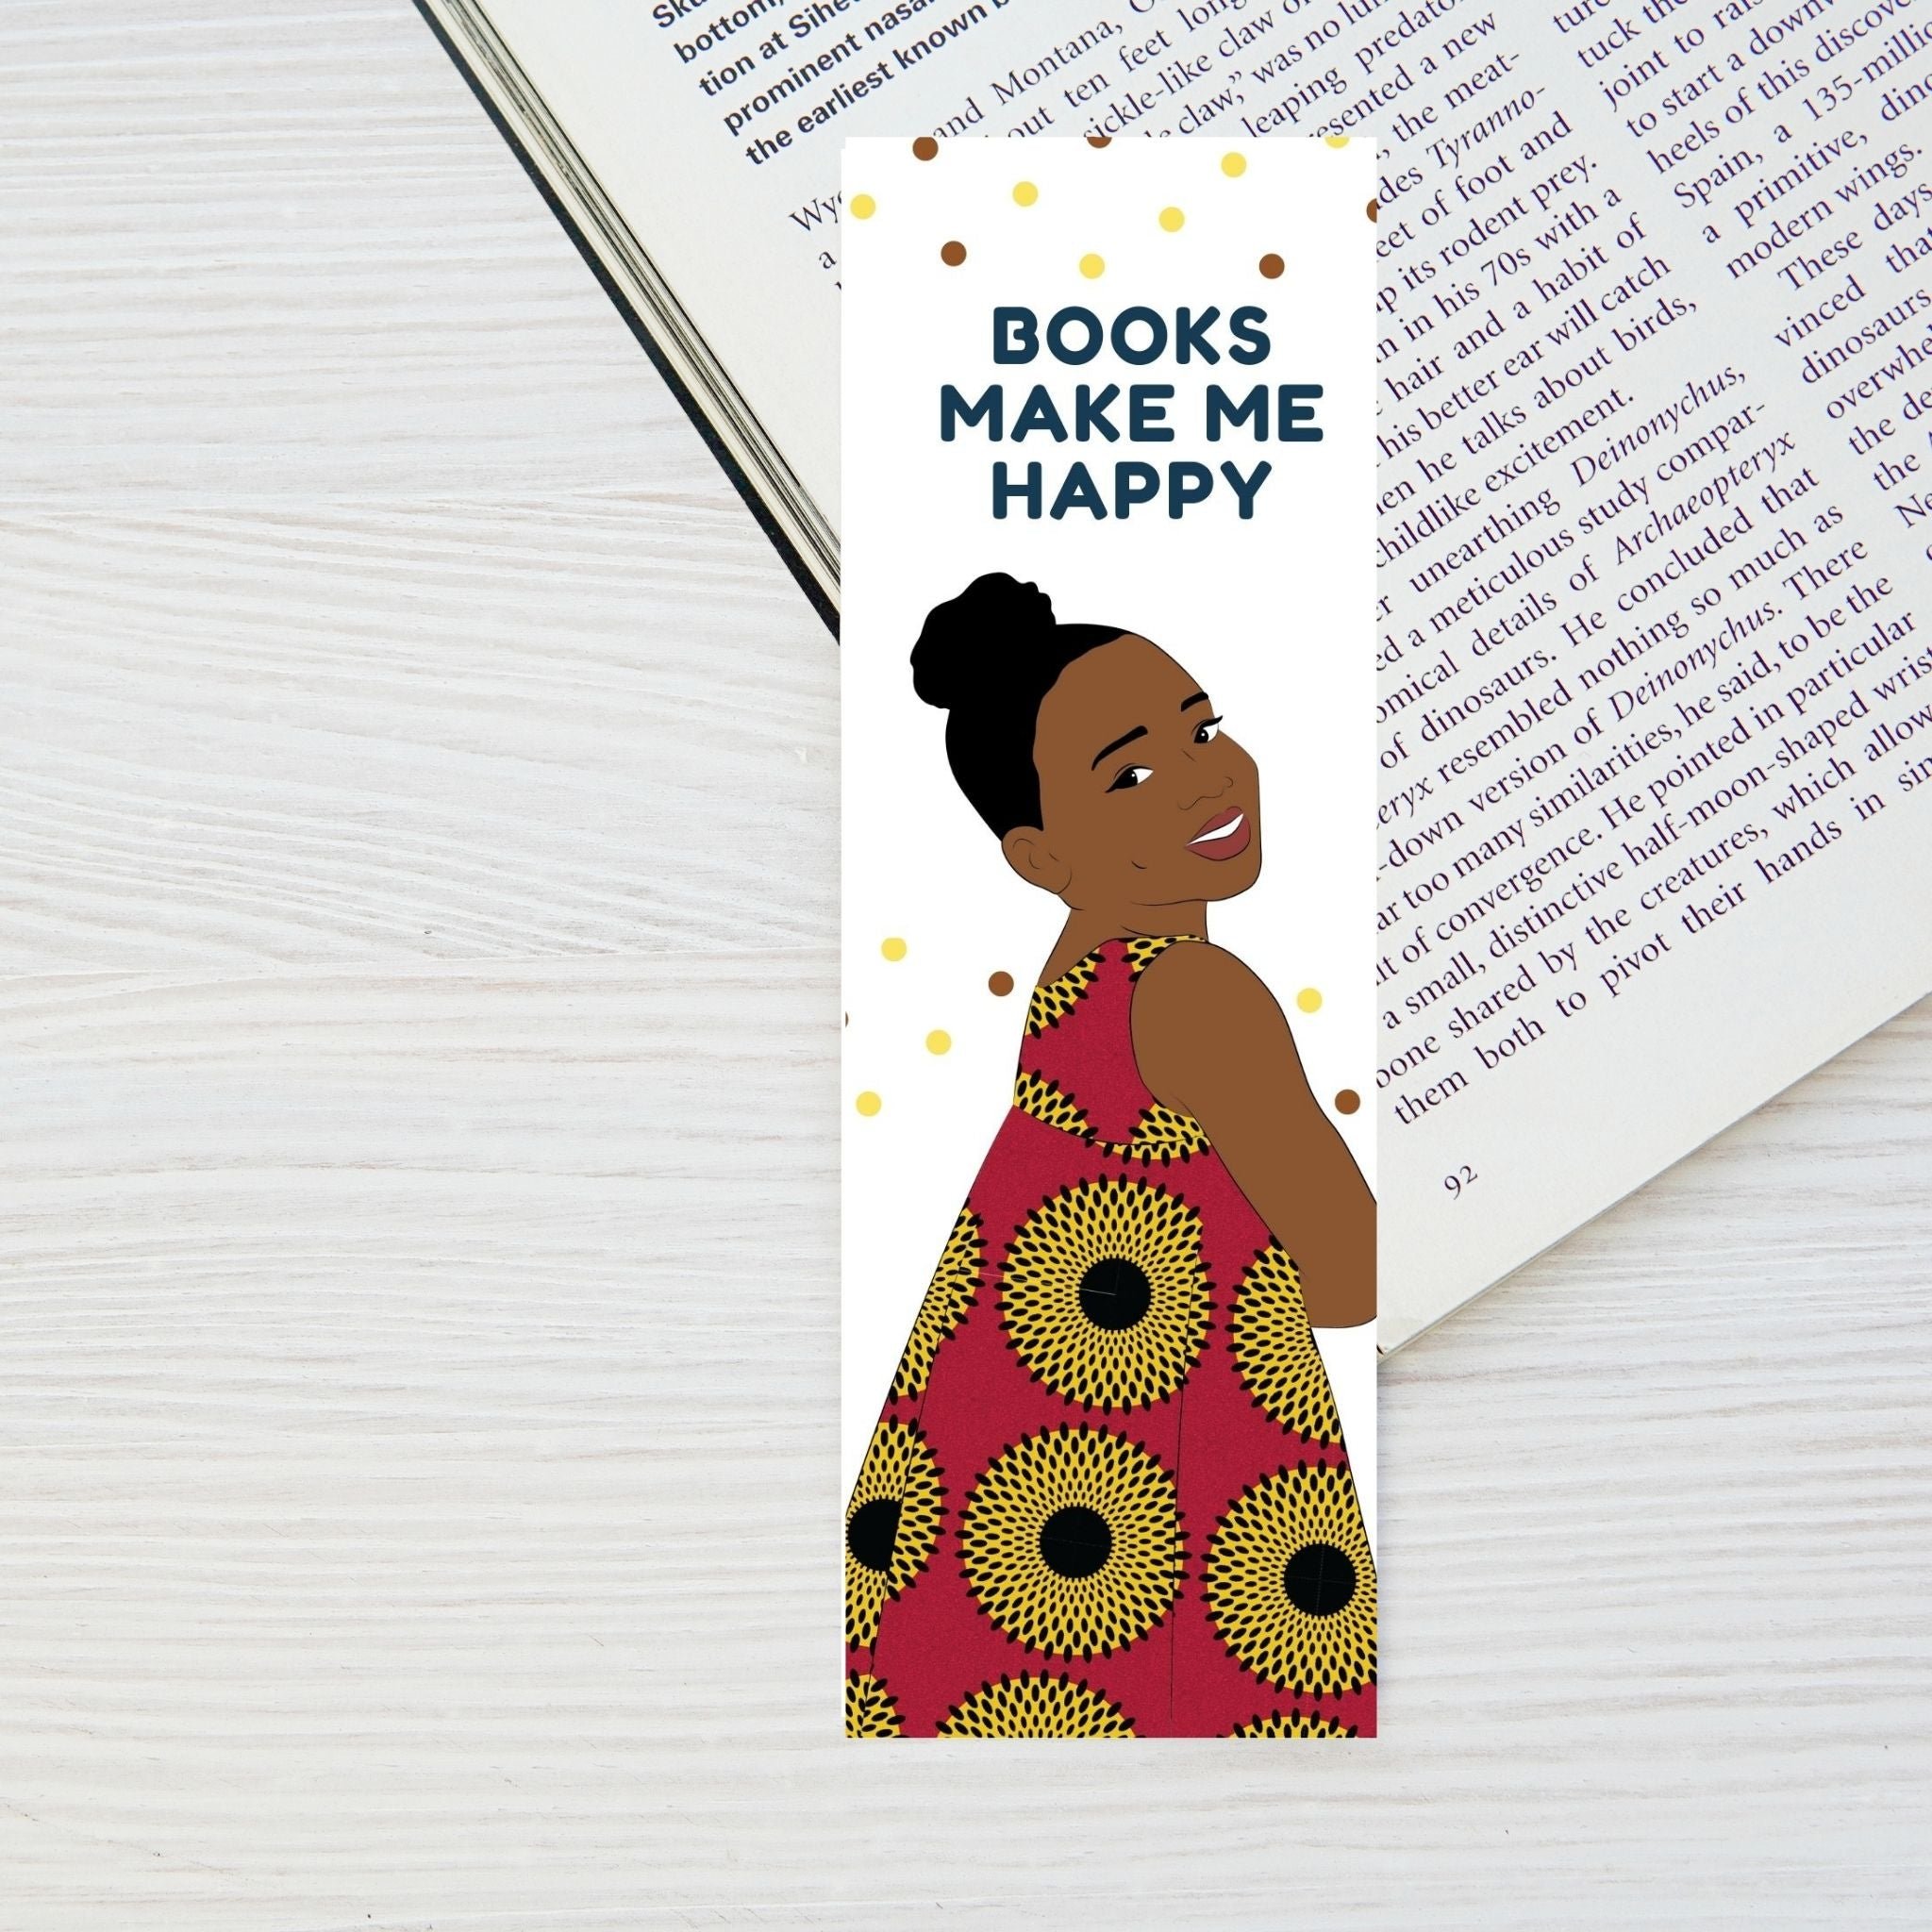 Black Girl Magic Bookmark